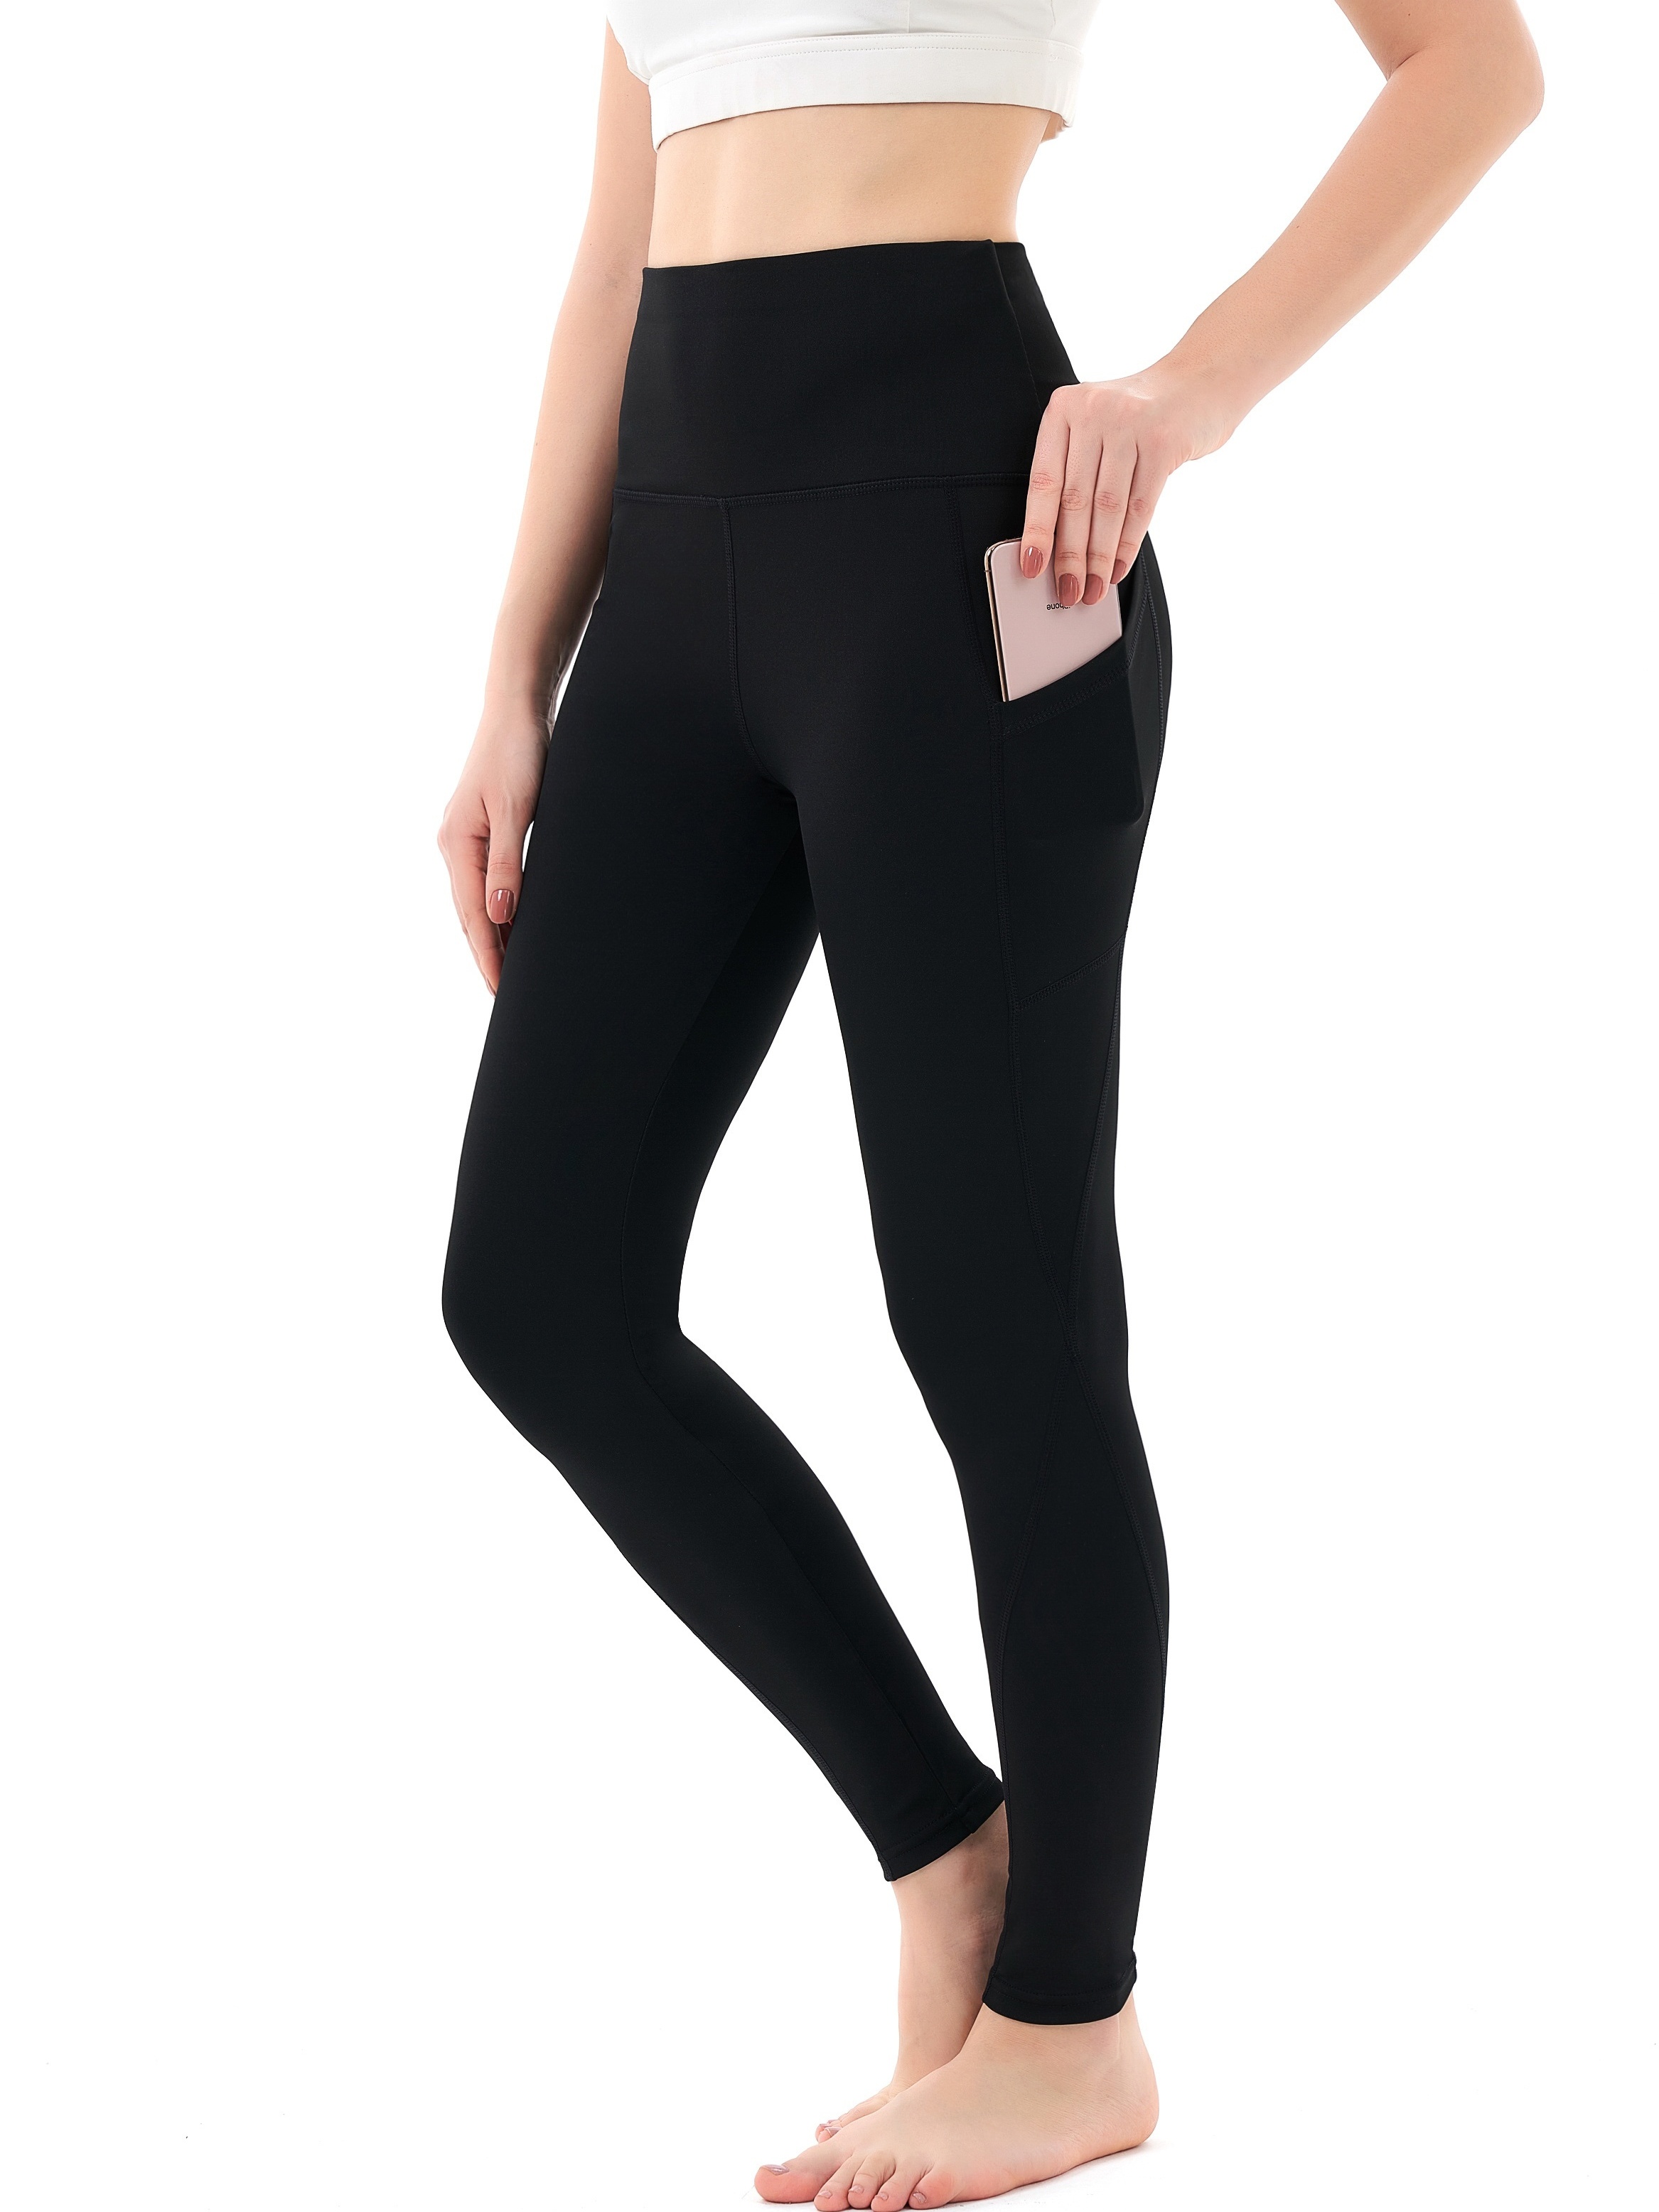 Women'S Yoga Dress Pants Tummy Control Pull On 4 Way Stretch Skinny Slim  Leggings,Black,Stretch Pants 